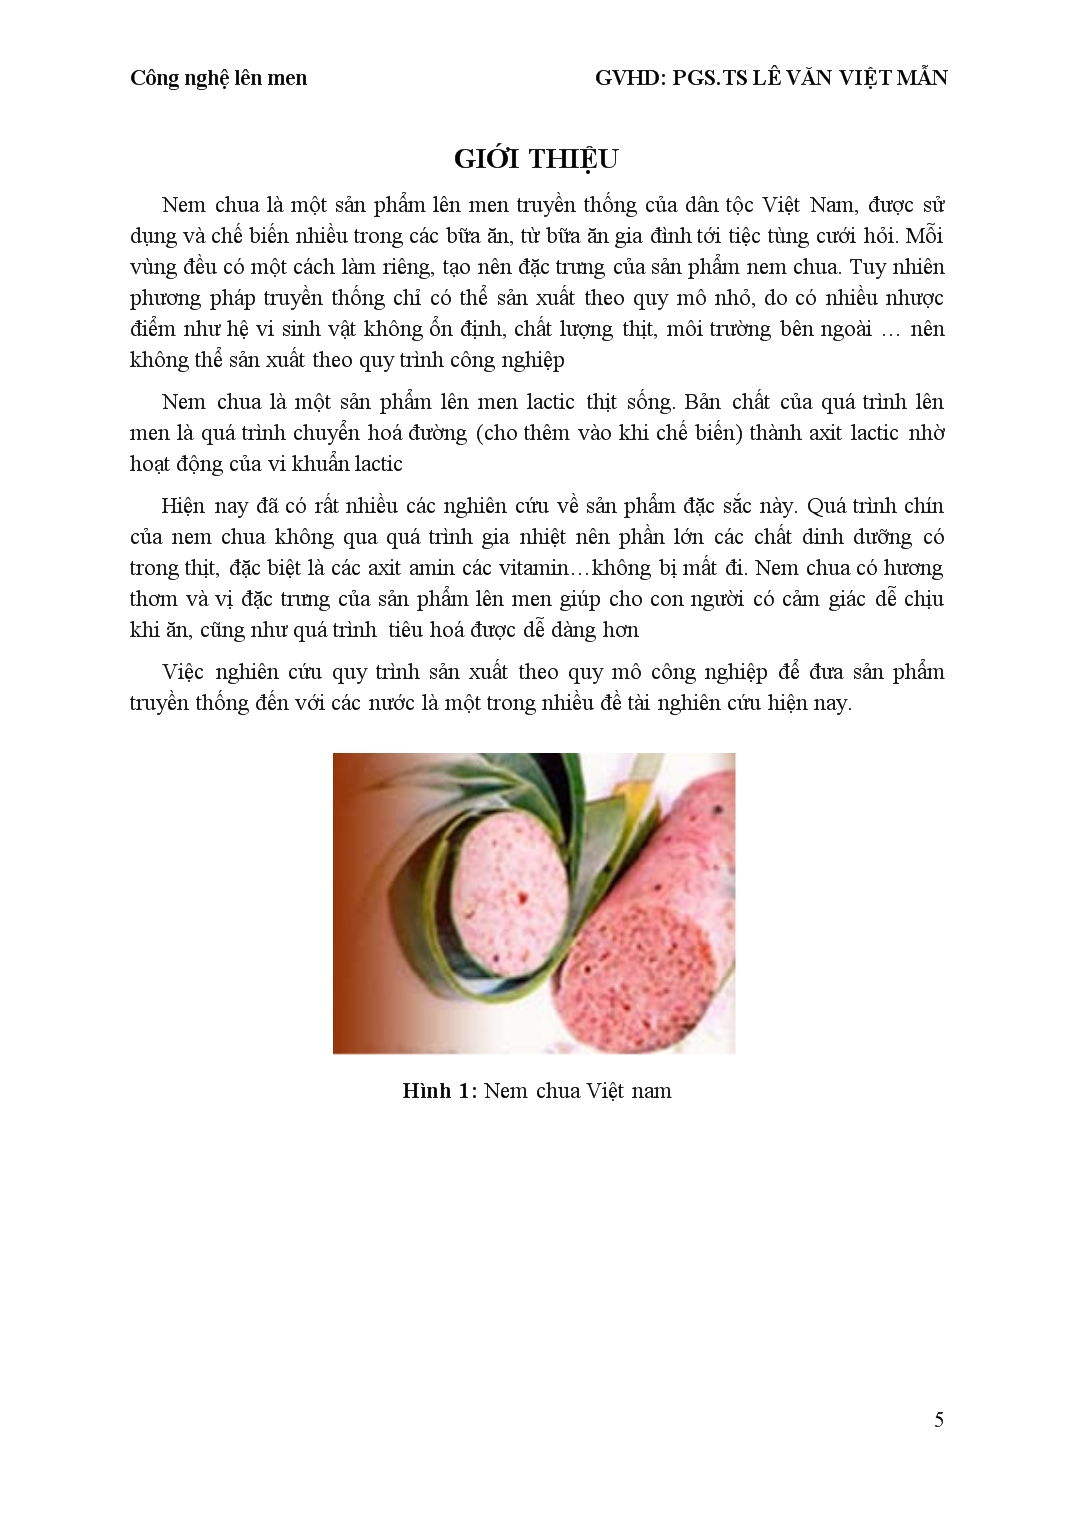 Báo cáo Fermented pork sản phẩm nem chua trang 5